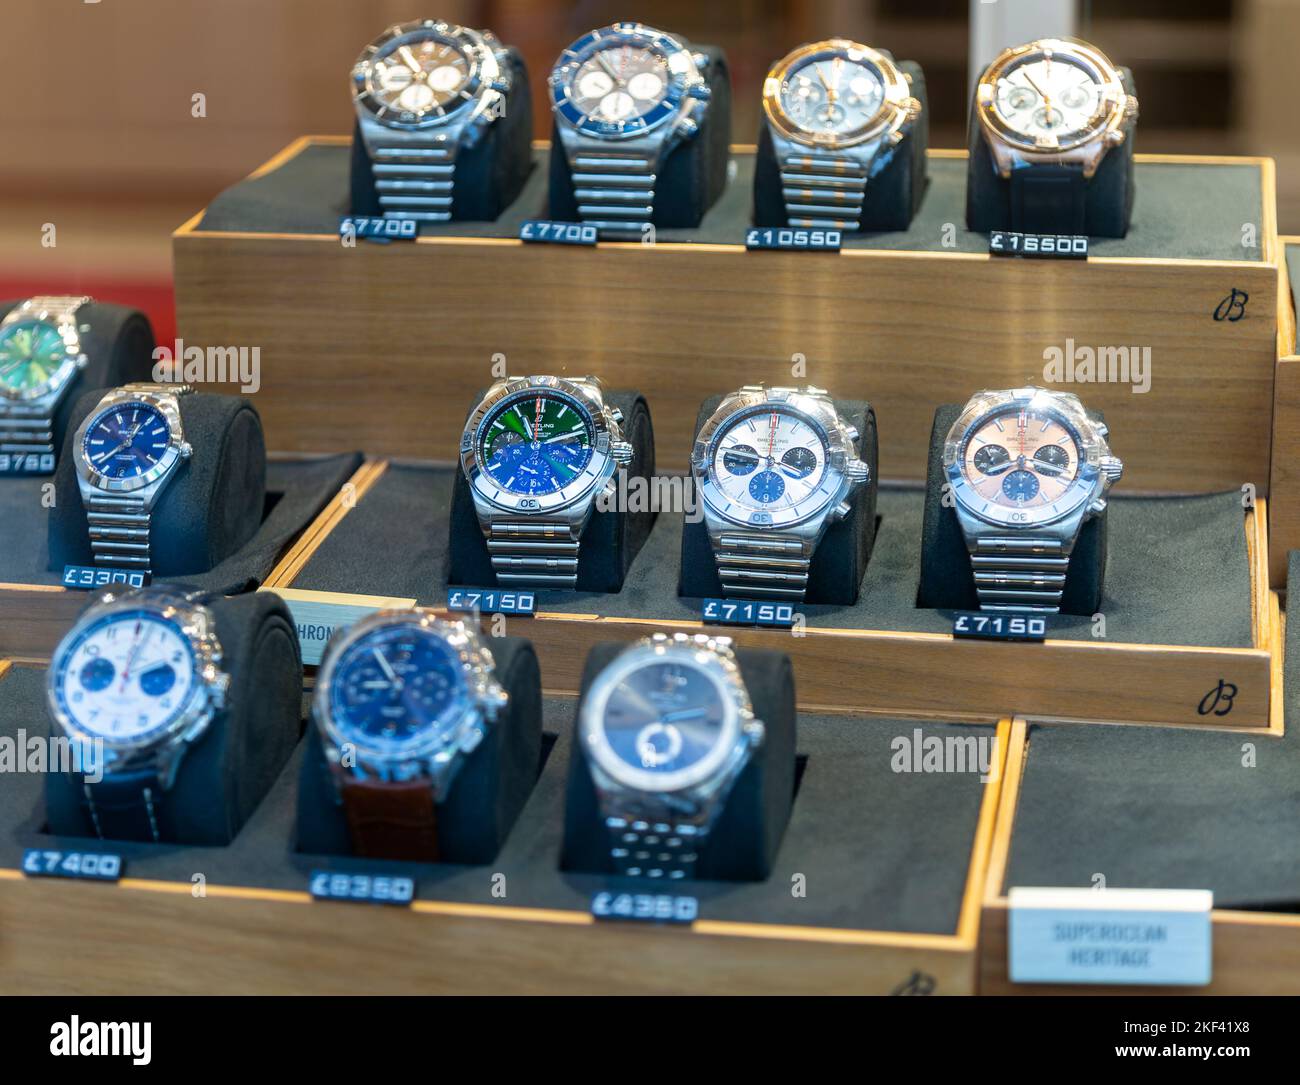 Breitling watches shop window display, Robert Gatward jewellers, Ipswich, Suffolk, England, UK Stock Photo